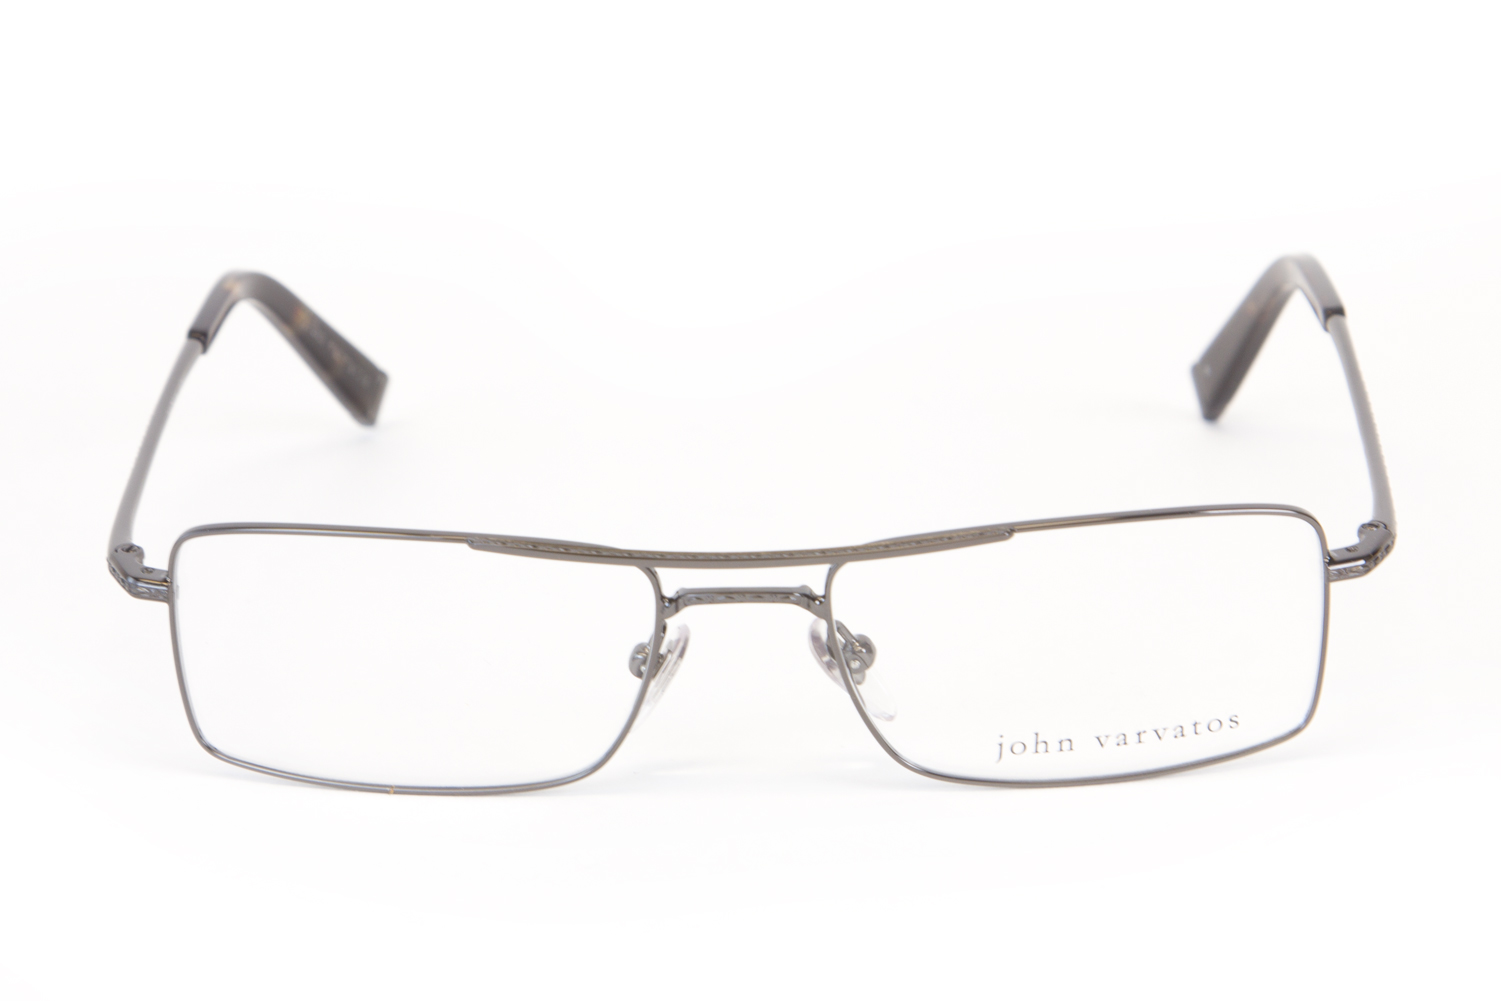 JOHN VARVATOS Men's Brow Bar Eyeglass Frames V138 $270 NEW | eBay